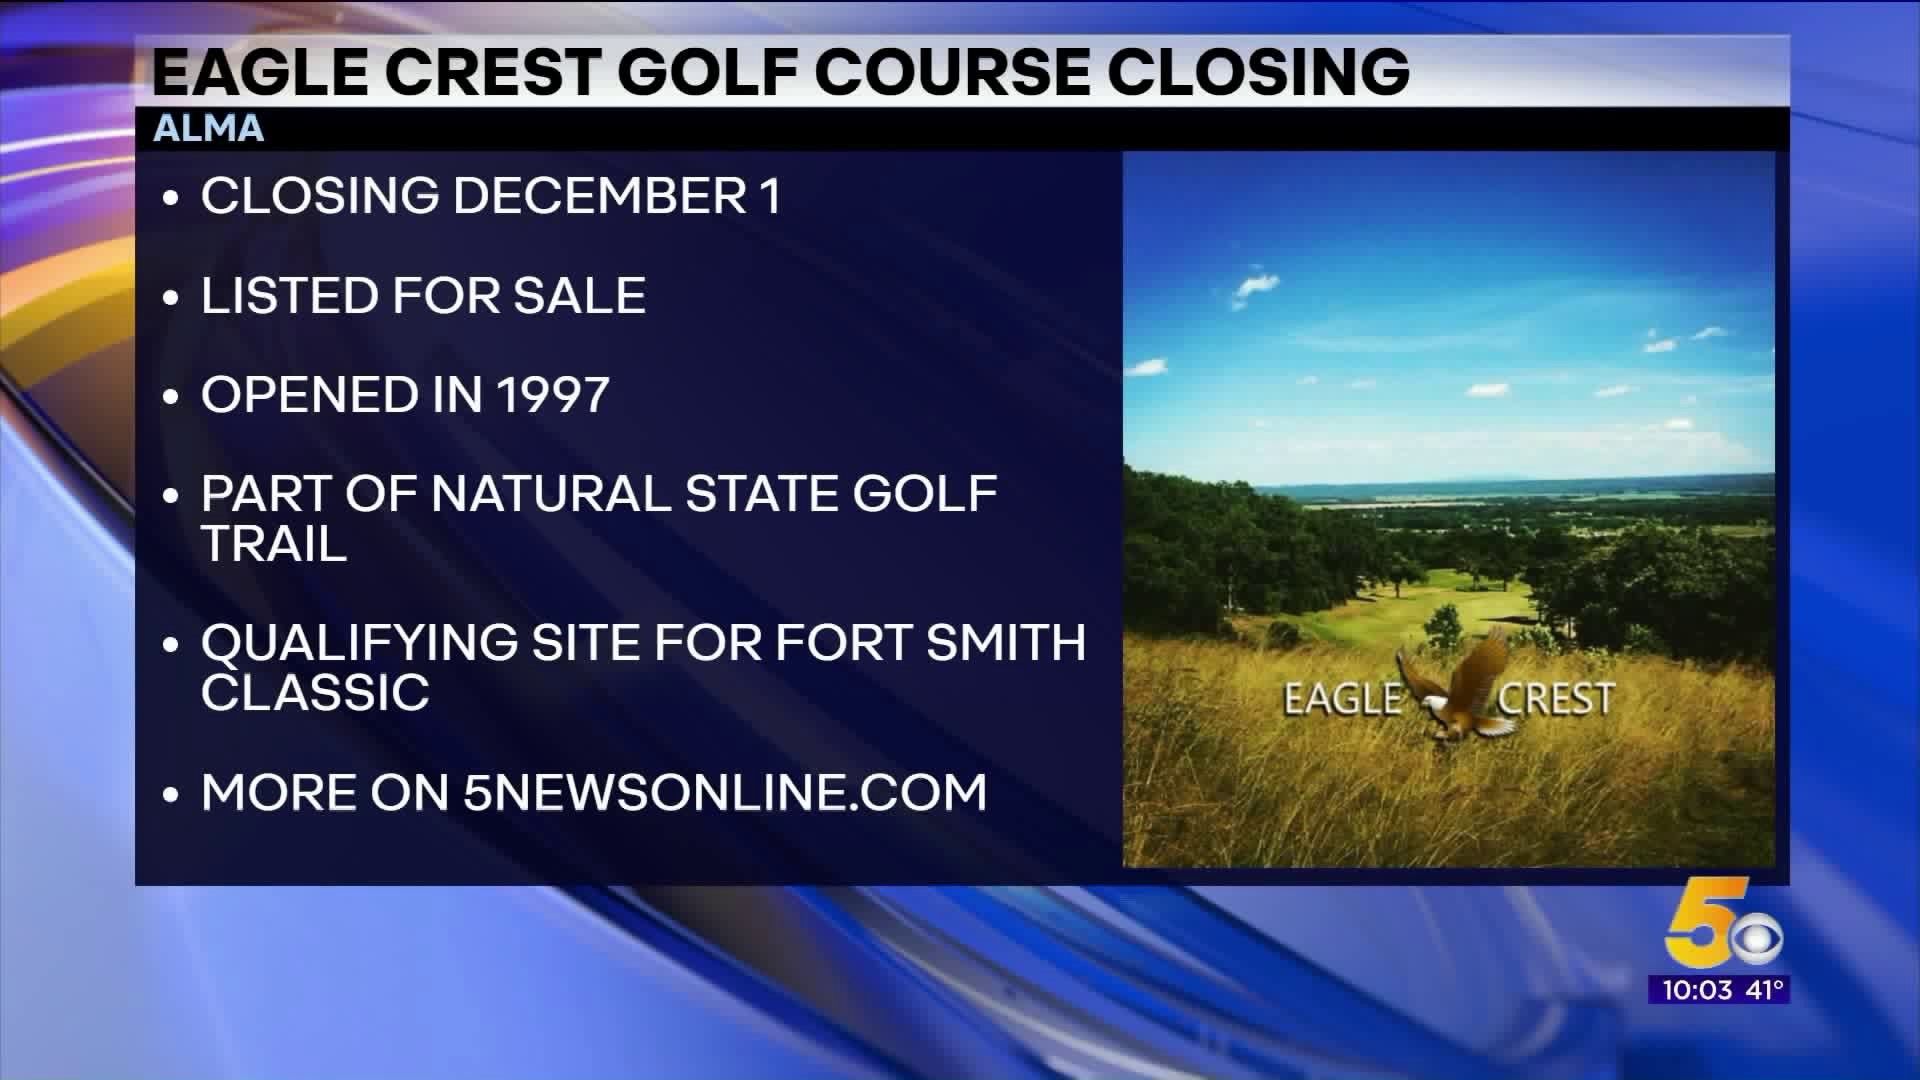 Eagle Crest Golf Course In Alma Closing